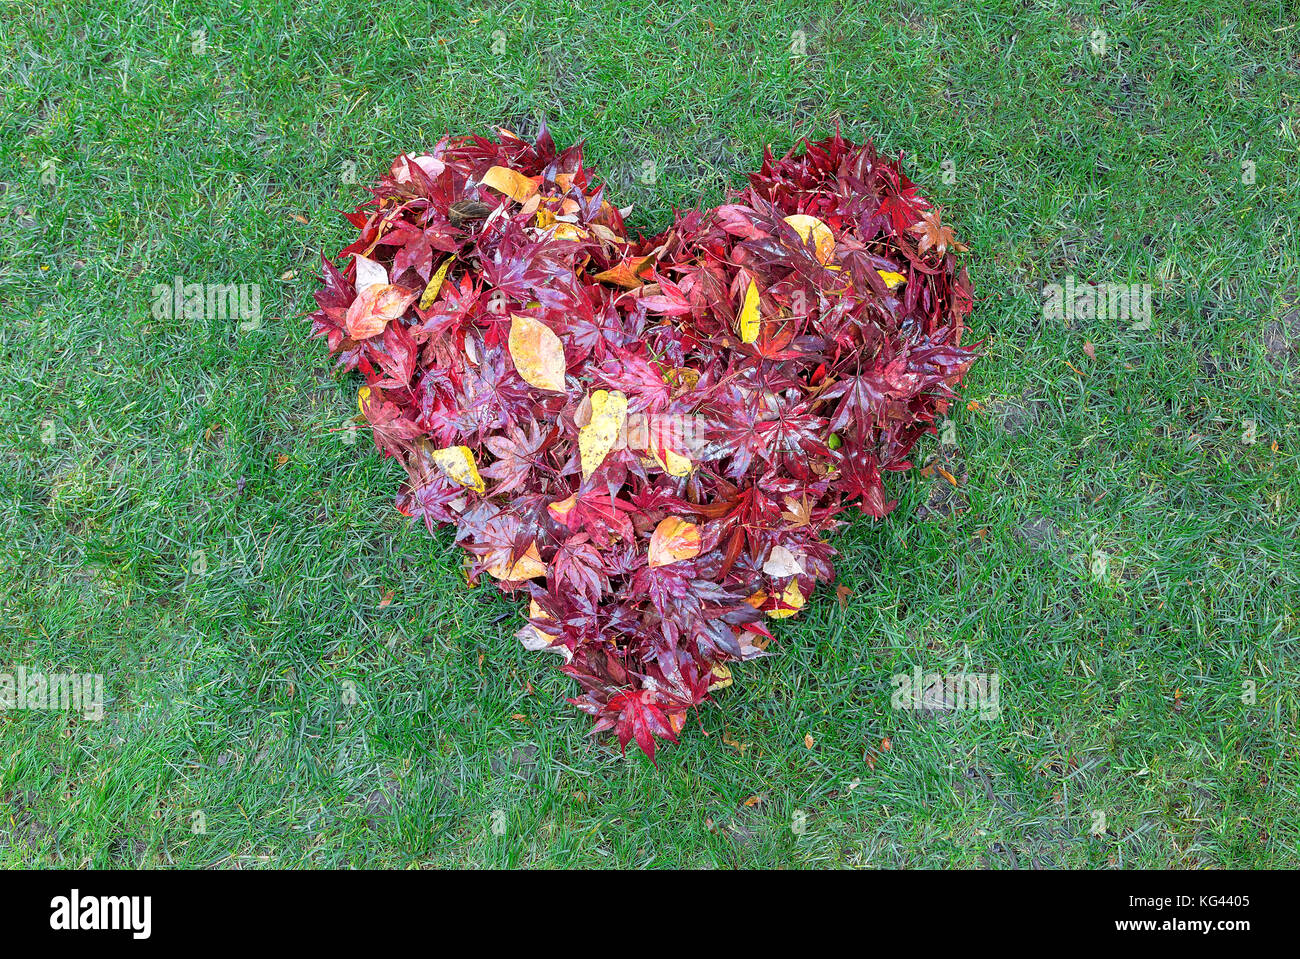 Fallen red maple tree leaves raked into heart shape on green grass lawn in autumn fall season Stock Photo